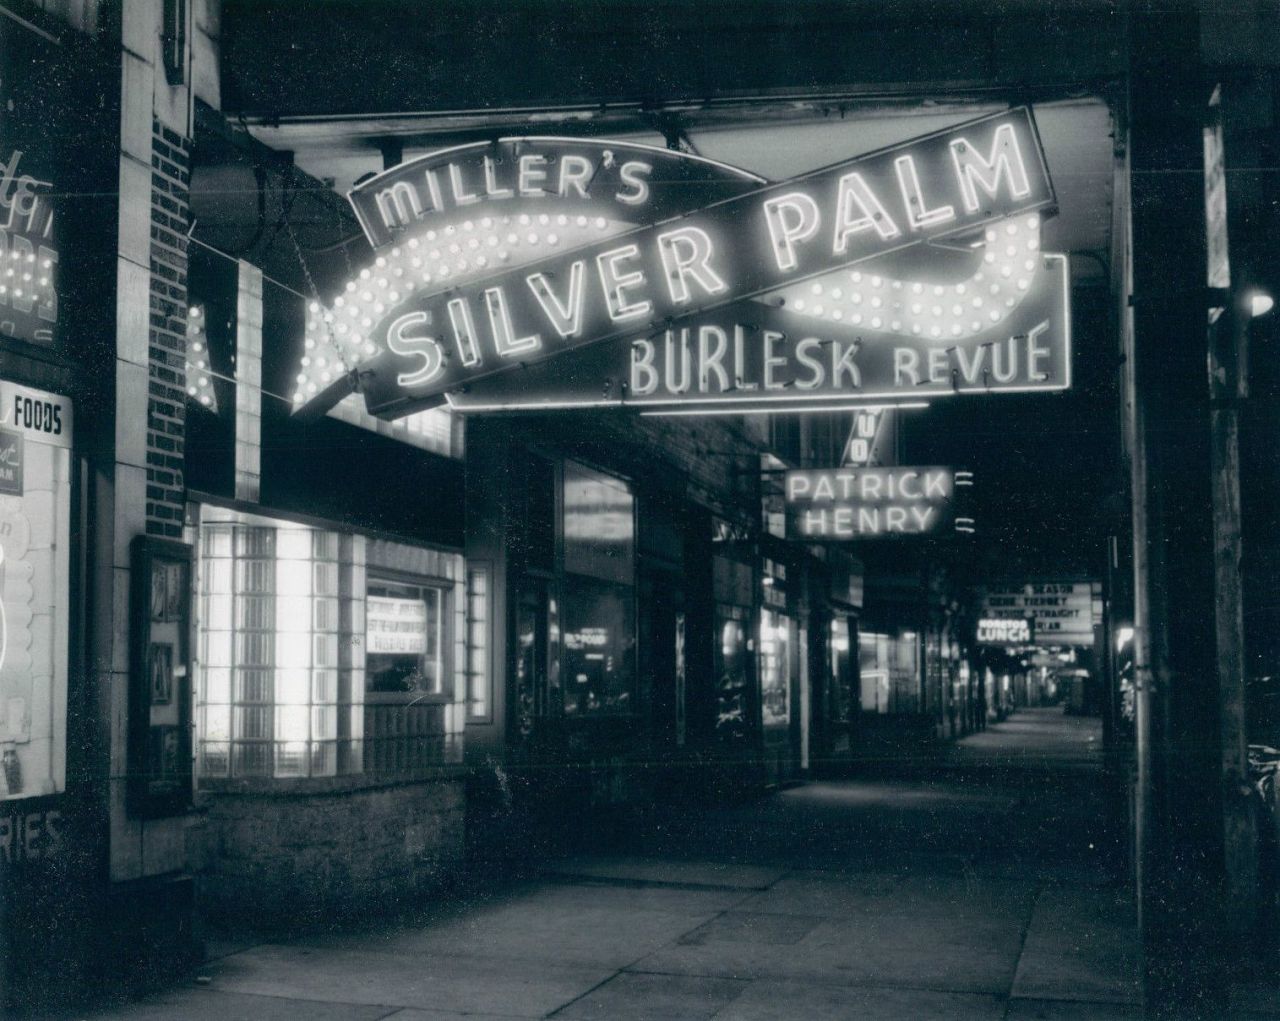 Miller’s Silver Palm Burlesk Revue - 1117 West Wilson Avenue, Chicago, Illinois - 1951